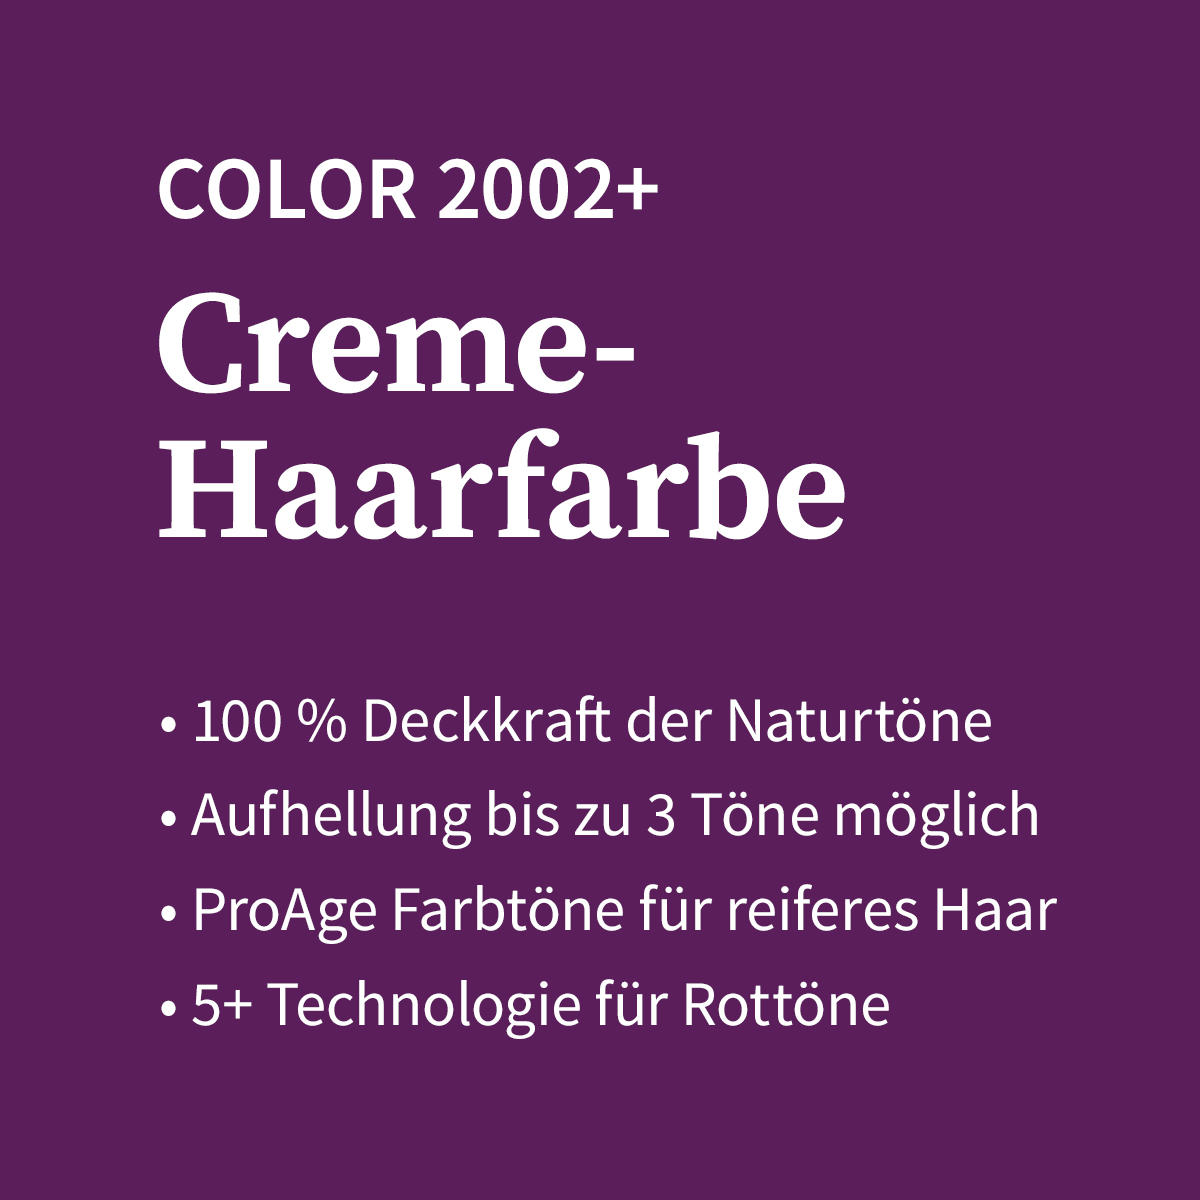 Basler Color 2002+ Cremehaarfarbe 7/0 mittelblond, Tube 60 ml - 4